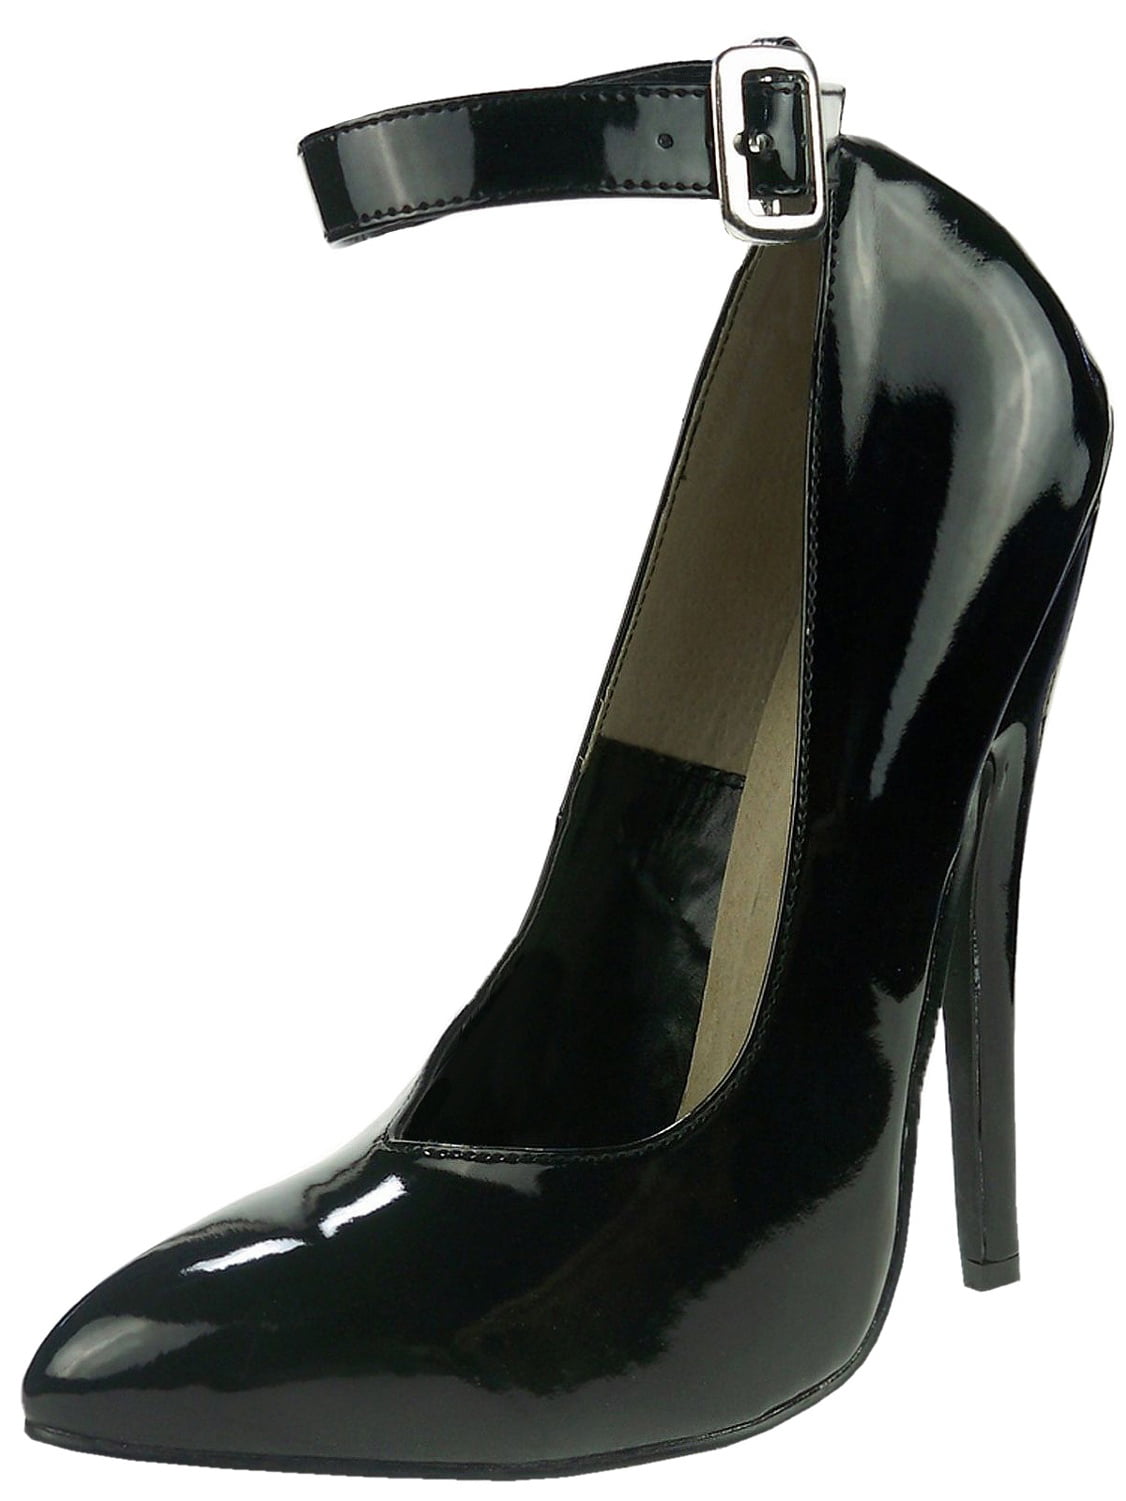 SummitFashions - Women's 6 Inch Heels Black Evening Bedroom Shoes ...